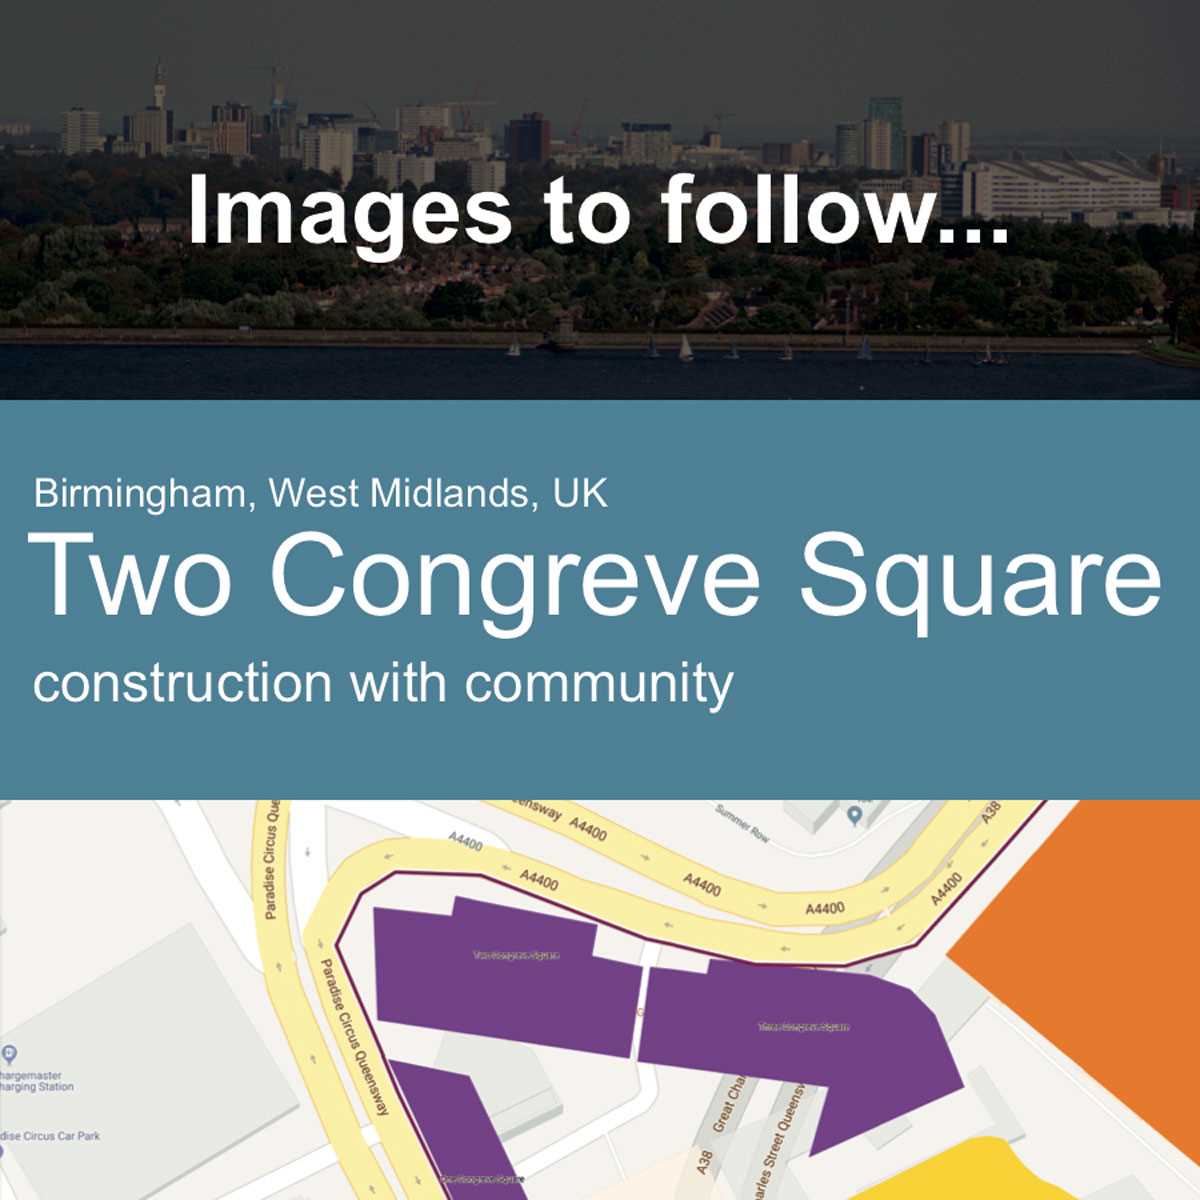 Two Congreve Square, Birmingham. UK - Construction with Community